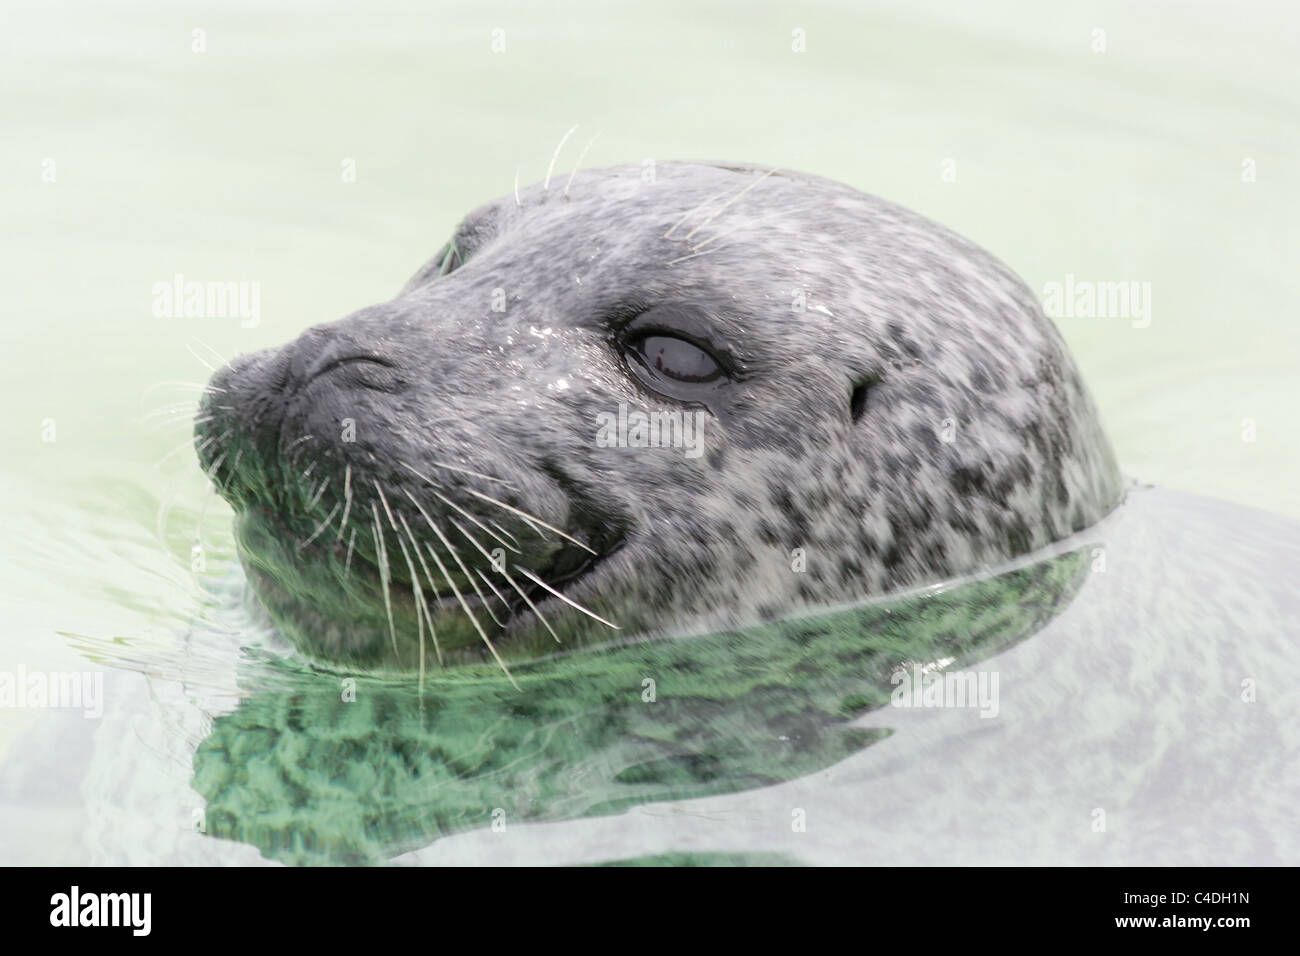 Seehund - seal - Phoca vitulina Stock Photo